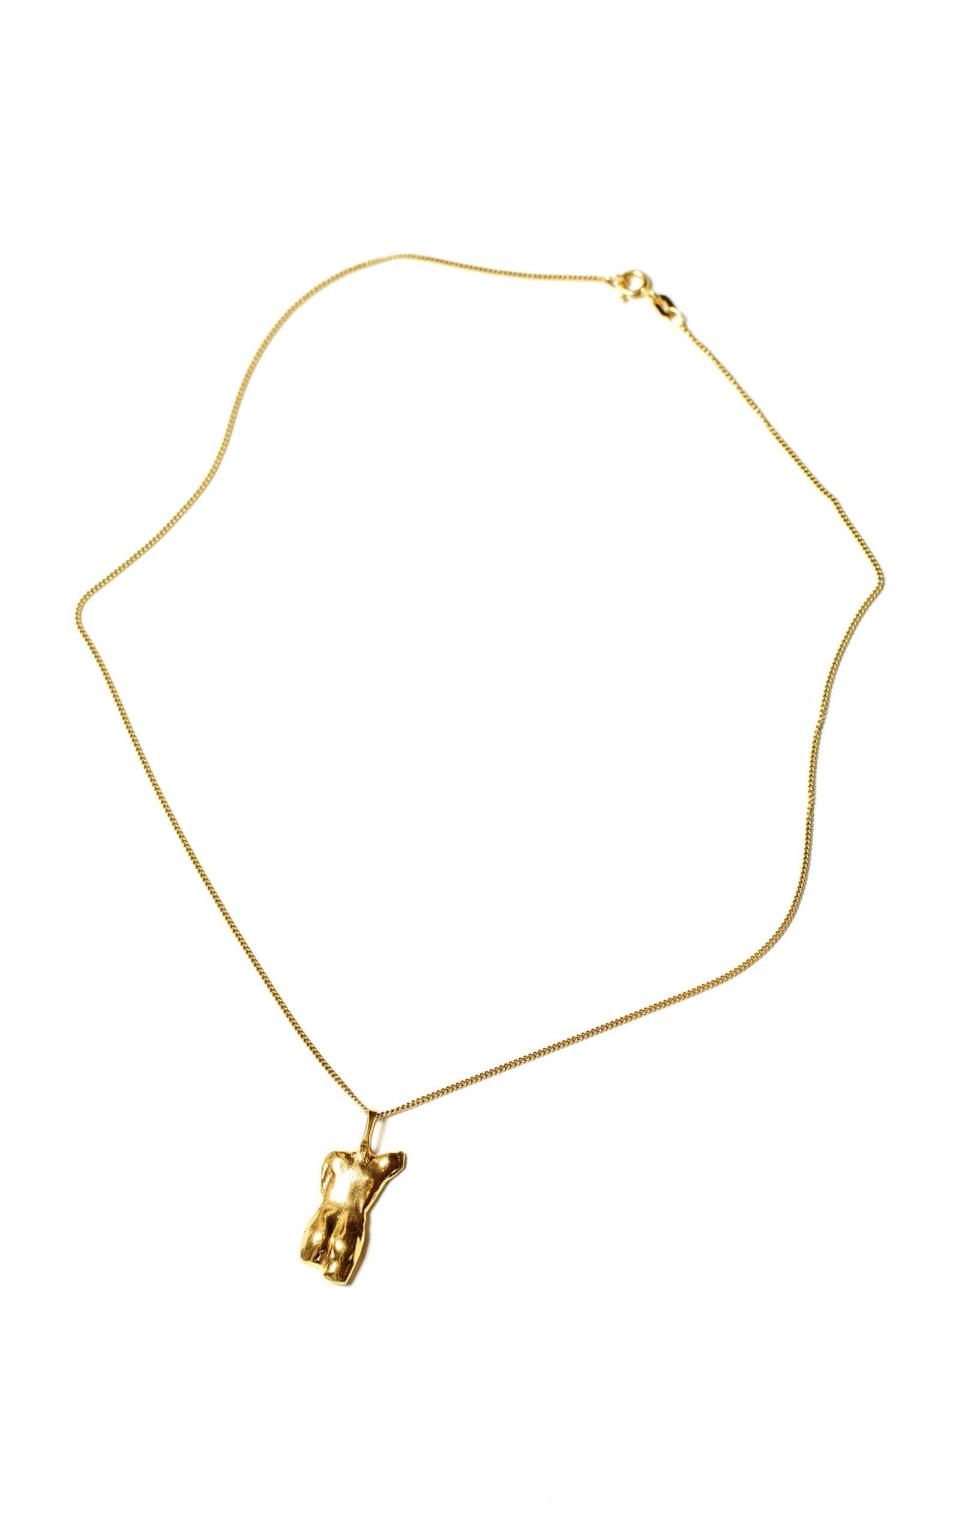 The Last Grace 24-Karat Gold-Plated Necklace